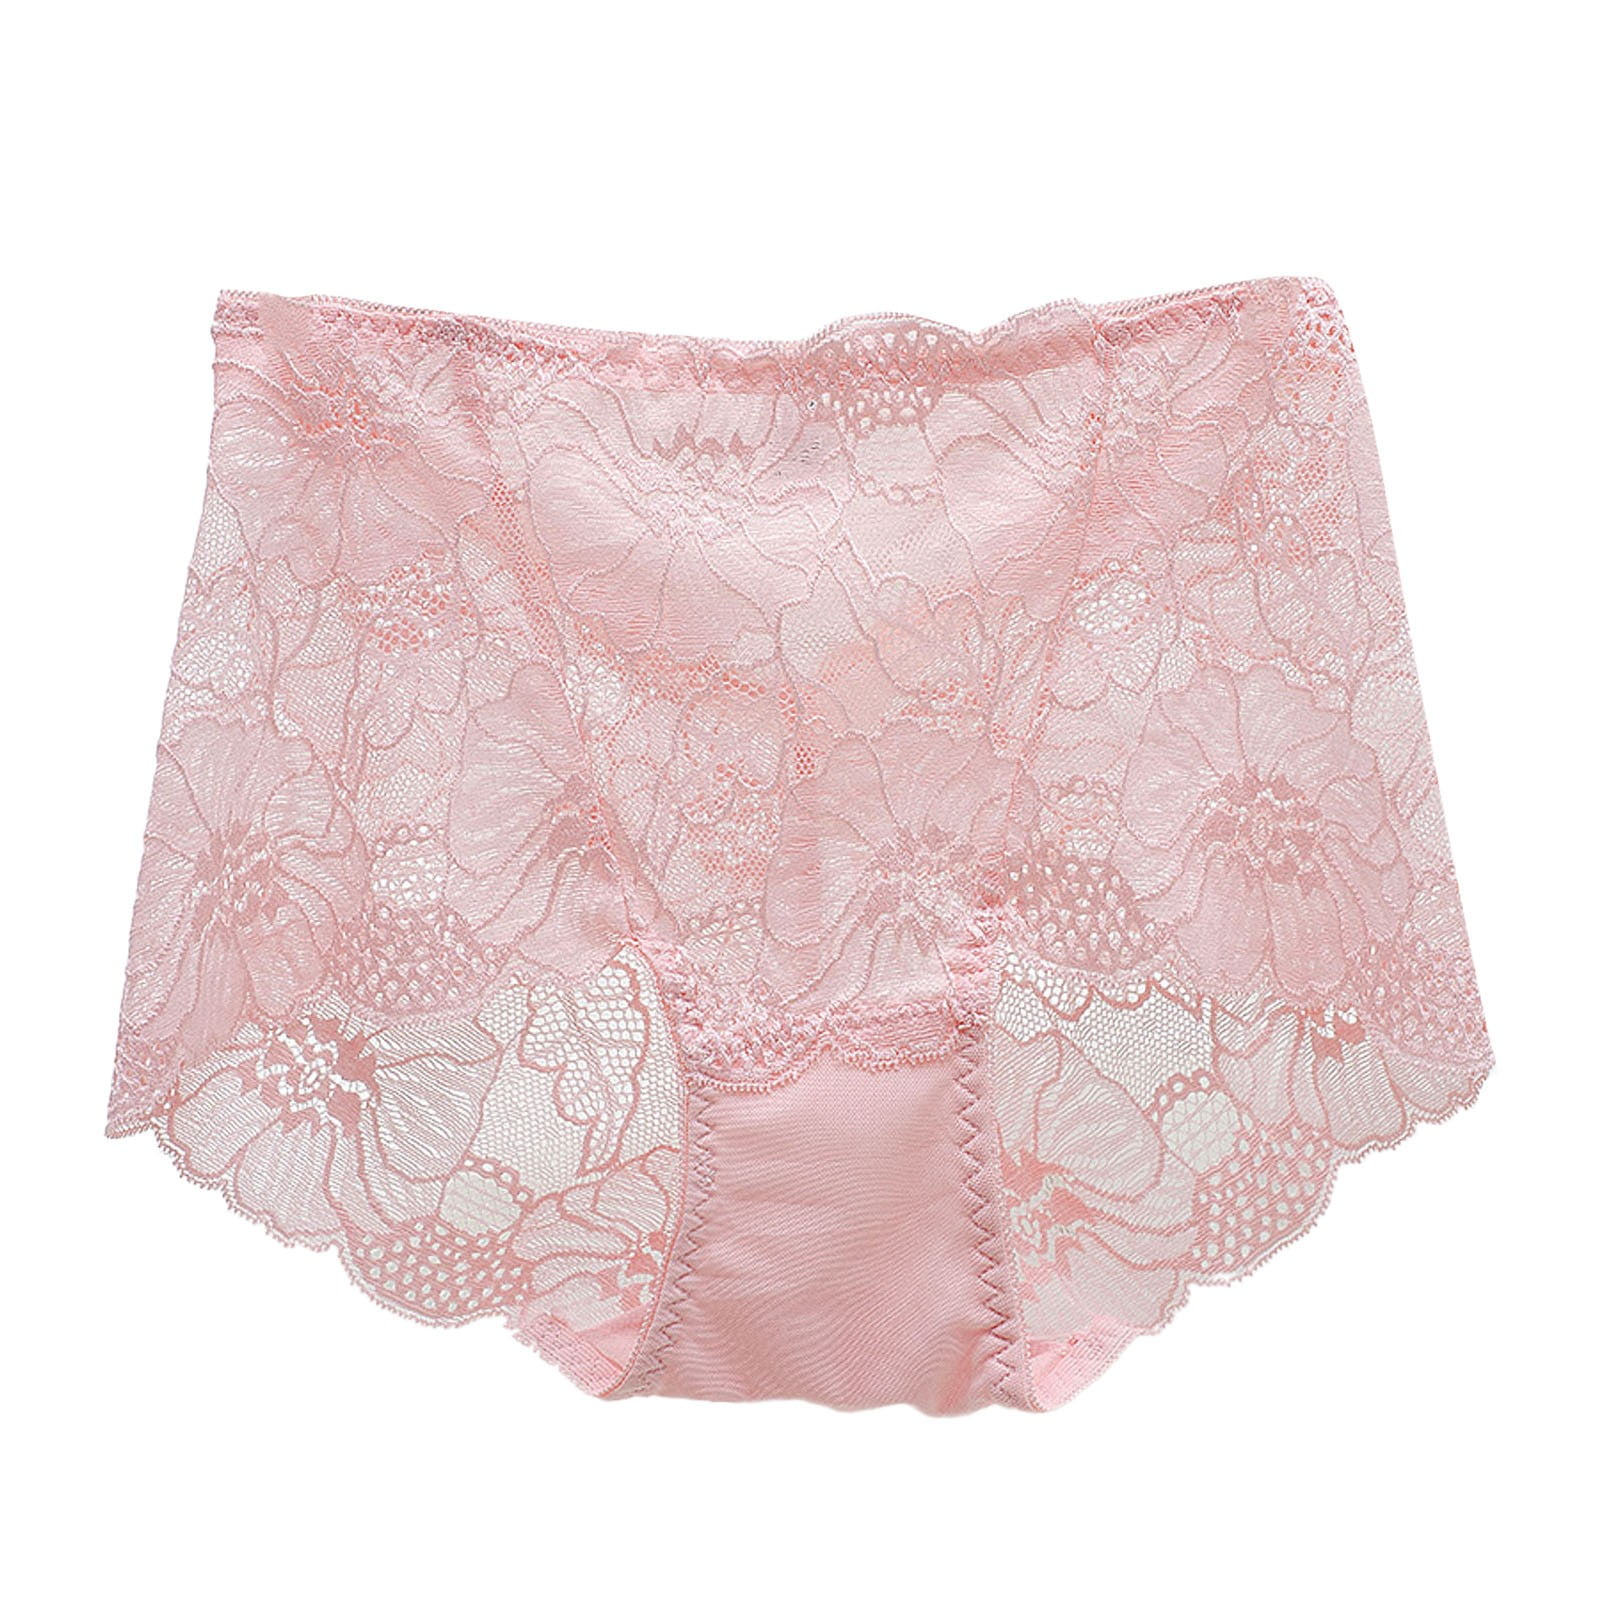 JDEFEG Cotton Women Underwear French Cut Waist Panties Lace